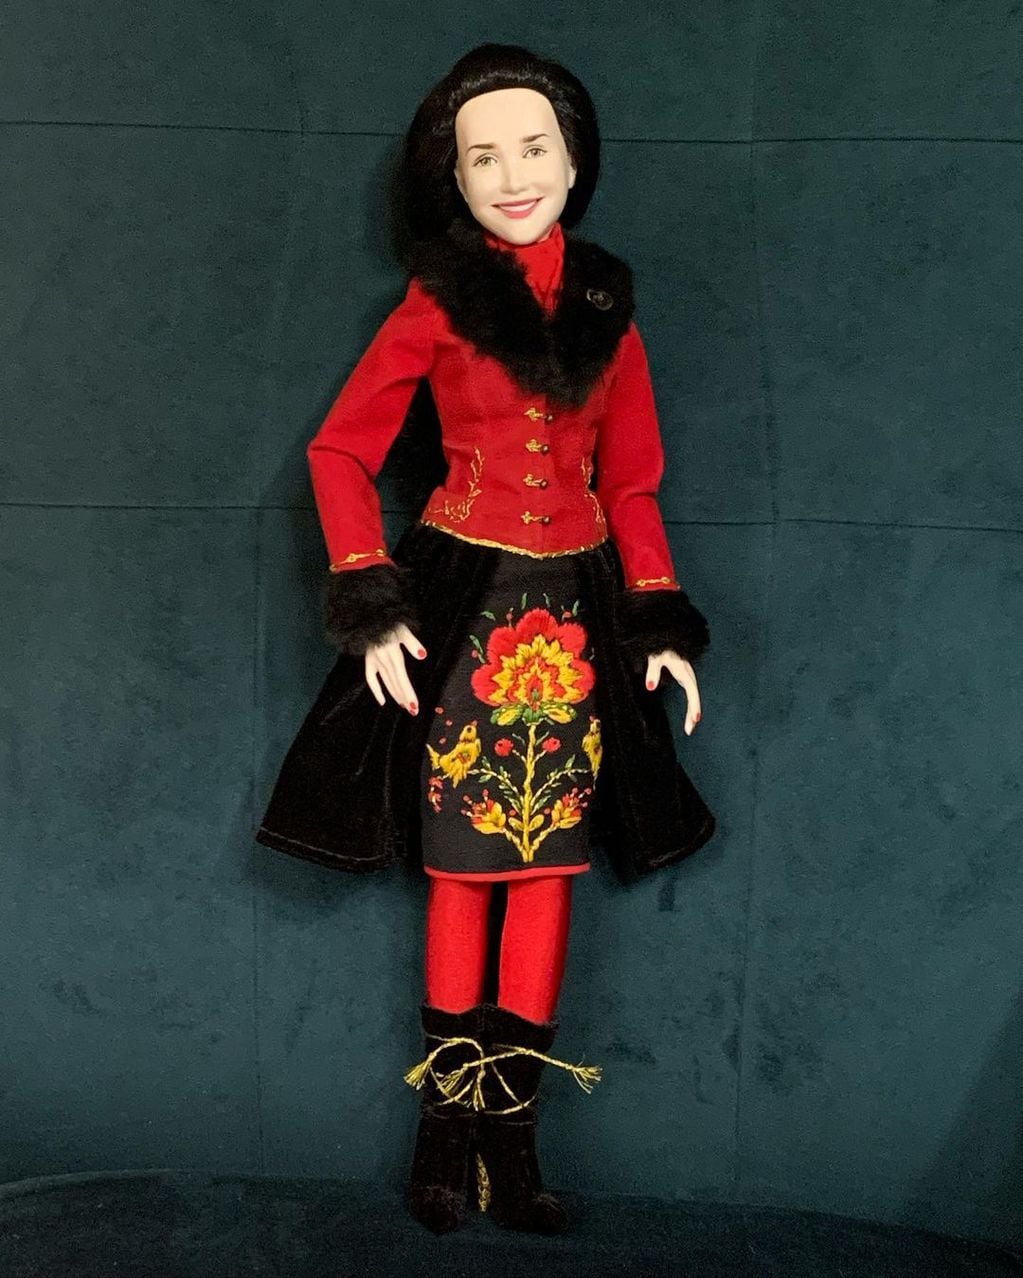 Así son las muñecas rusas de Natalia Oreiro. / WEB